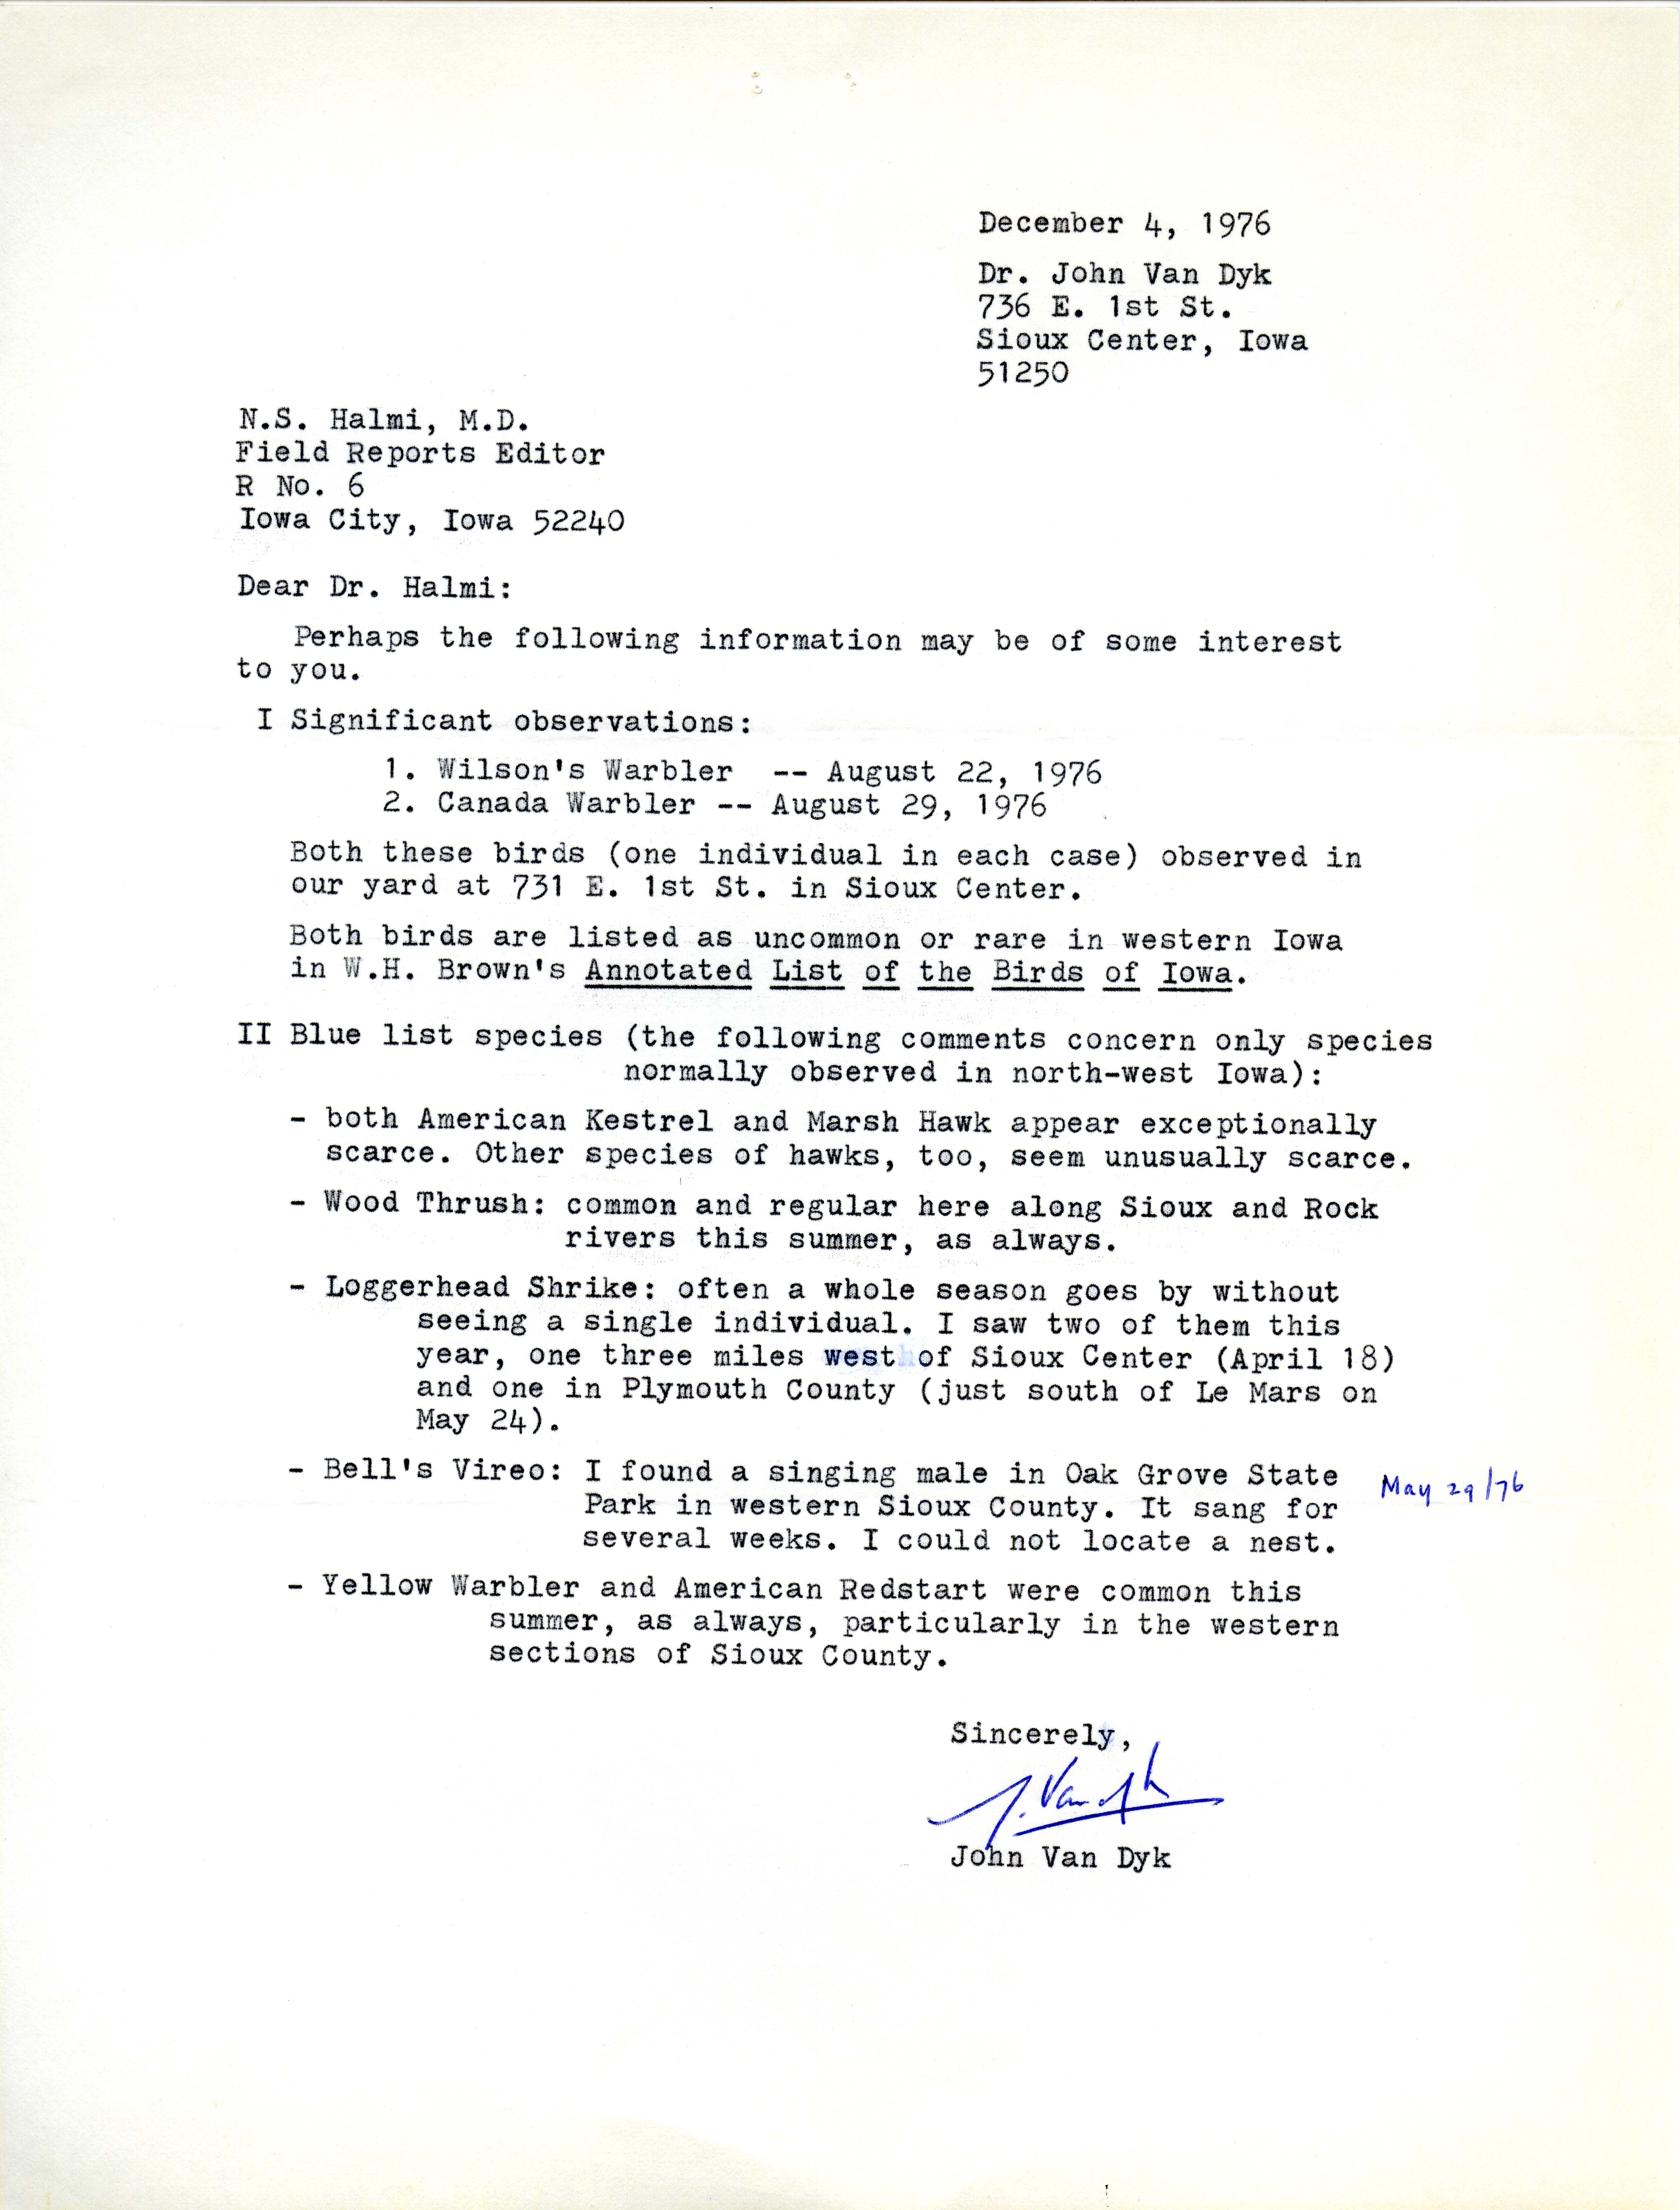 John Van Dyk letter to Nicholas S.Halmi regarding bird migration, fall 1976